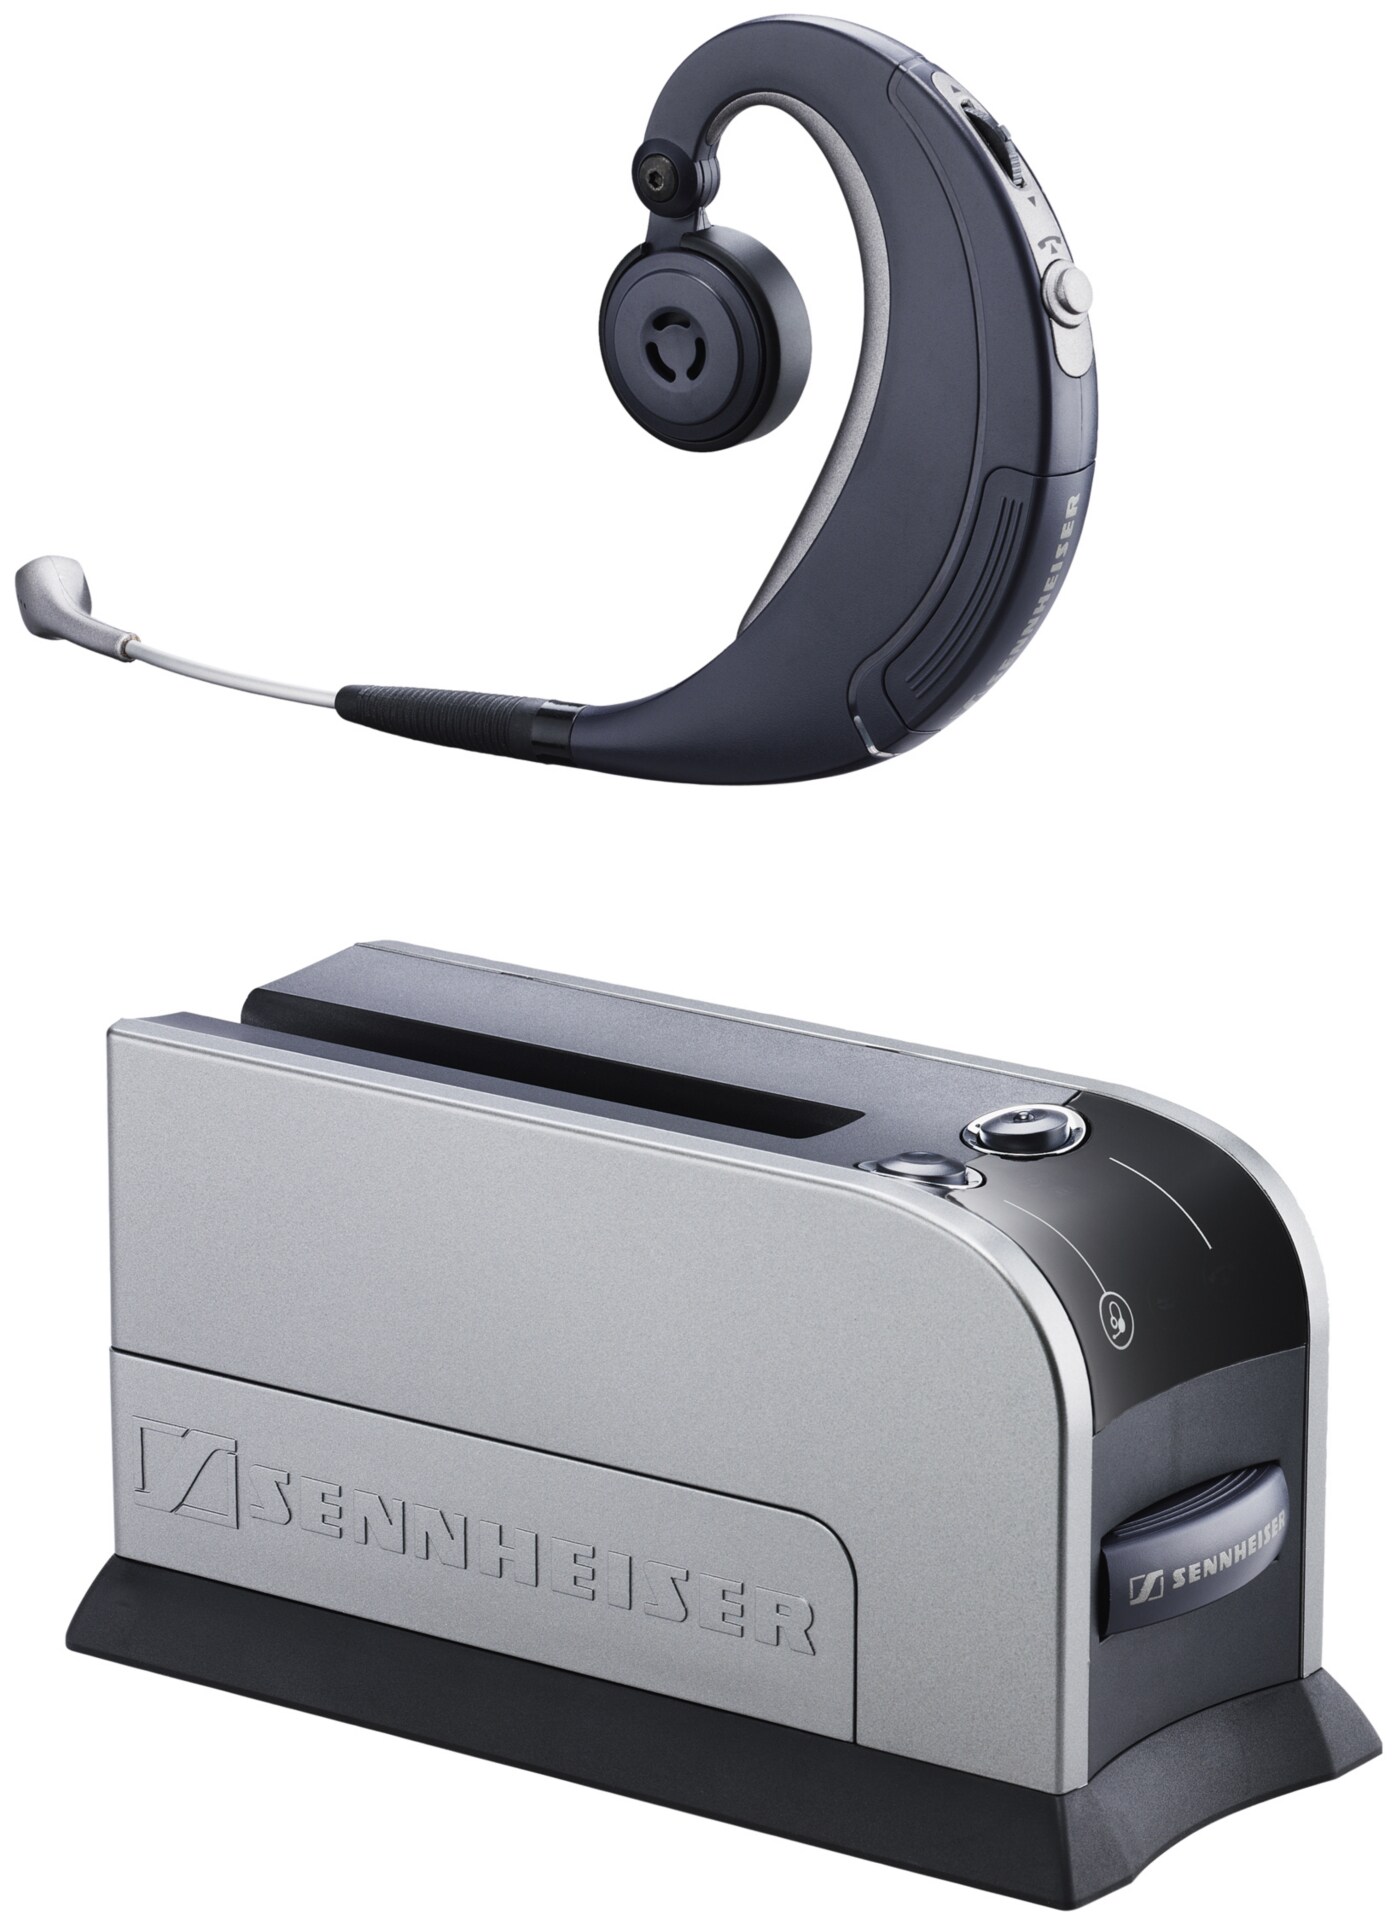 Sennheiser BW900 Wireless Office Headset